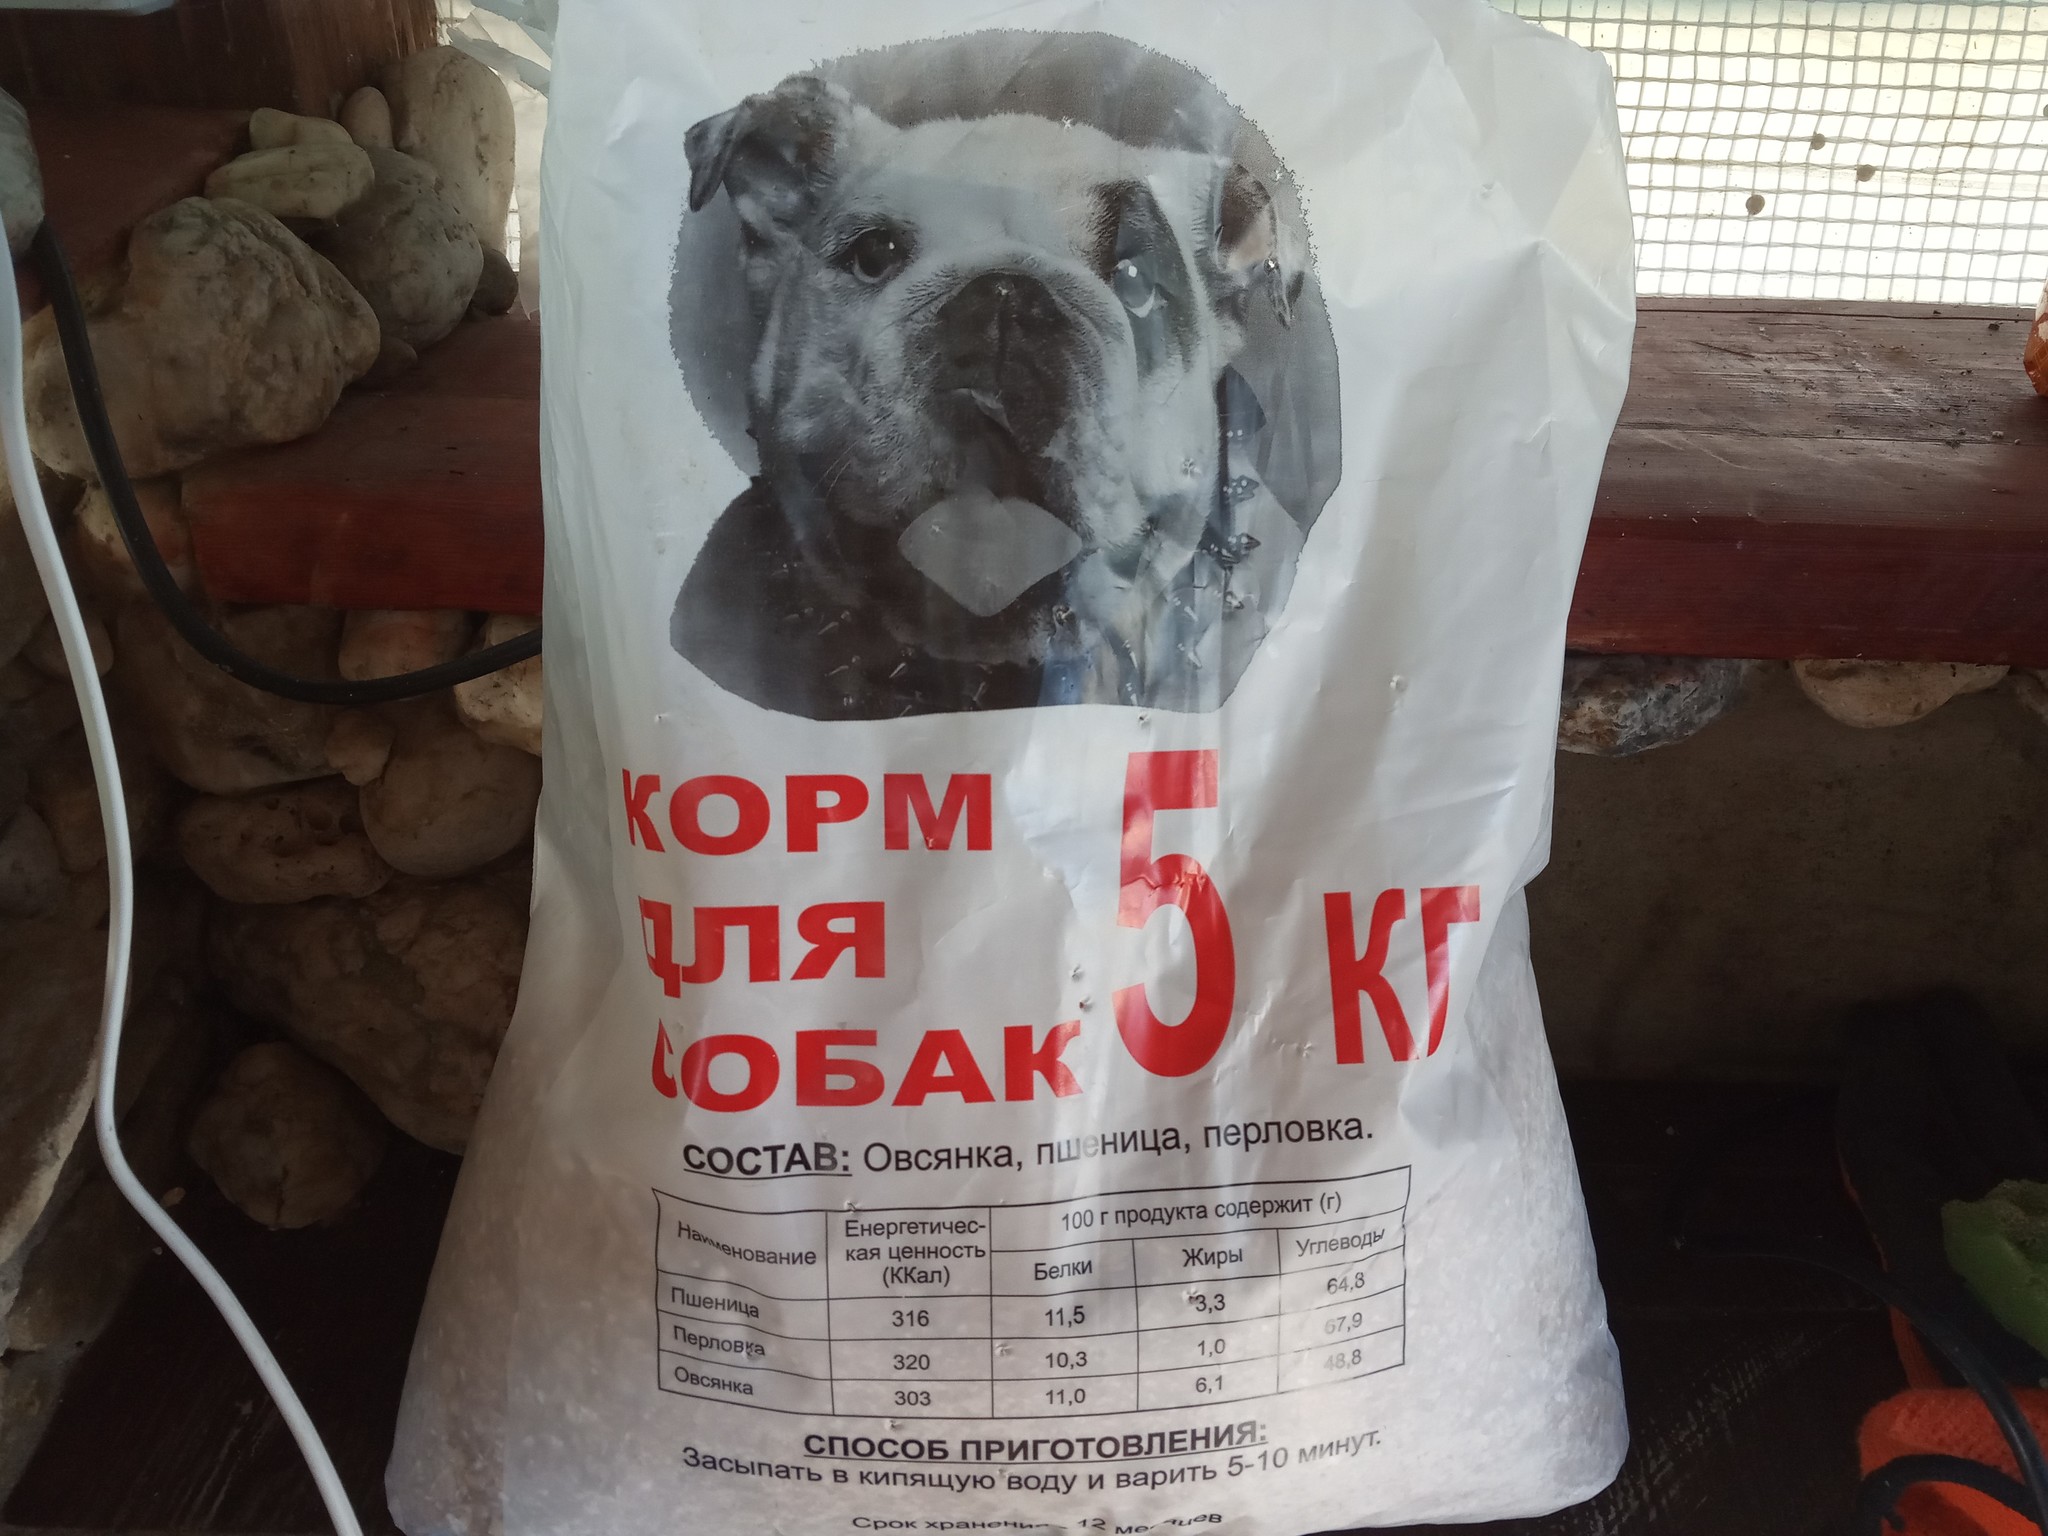 Корм для собак друг. Глебушка корм для собак. Собачий корм из хлеба. Собачий корм в СССР. Монс корм для собак.